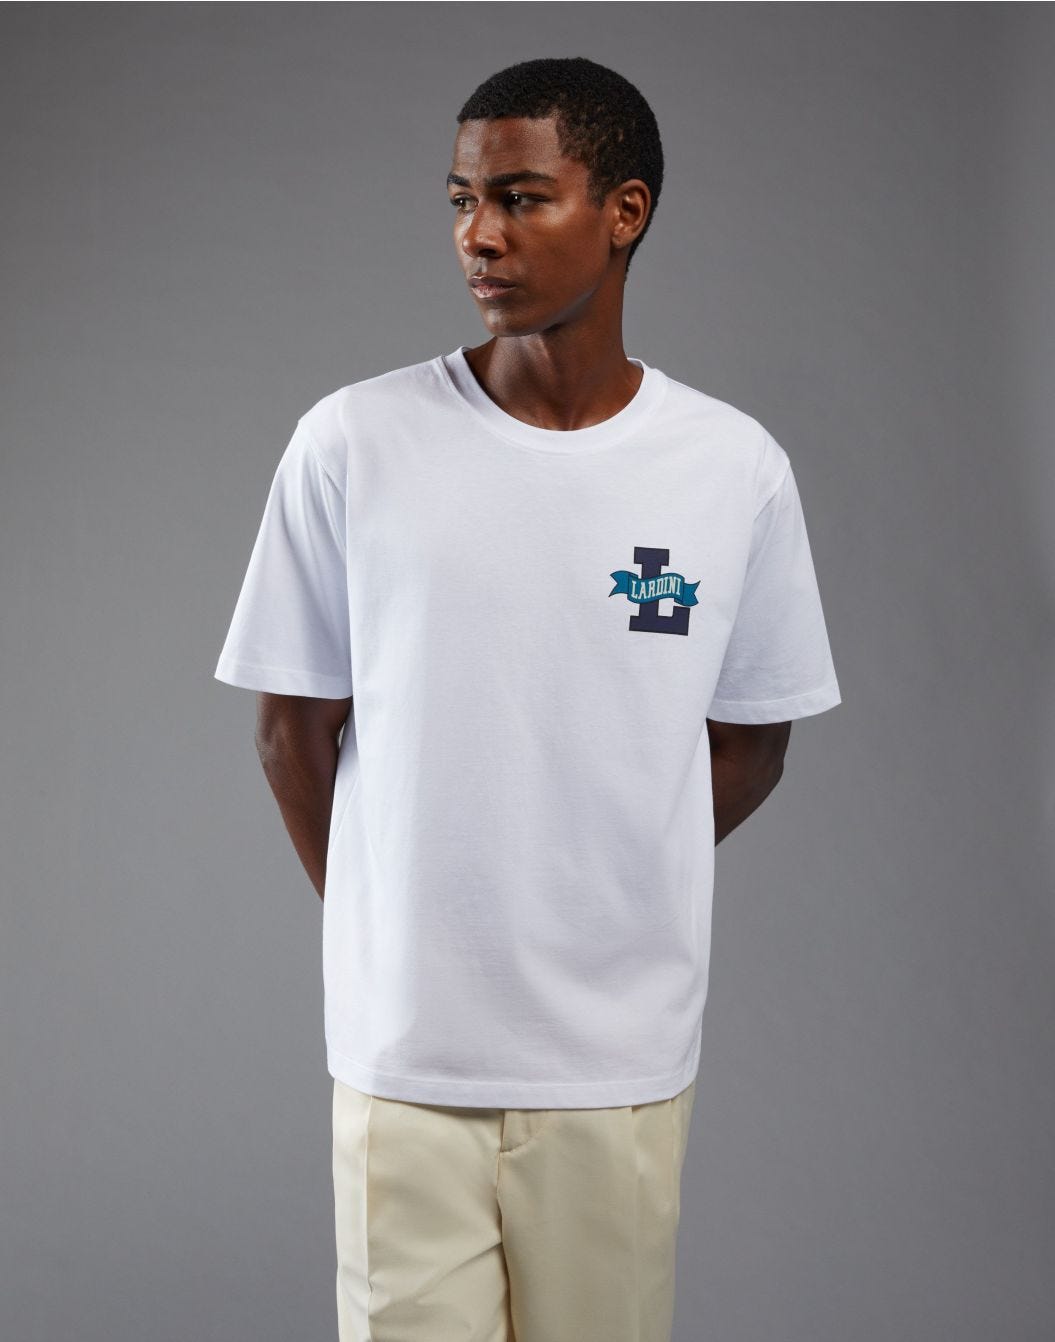 T-shirt Terzini x Lardini bianco e blu con stampa